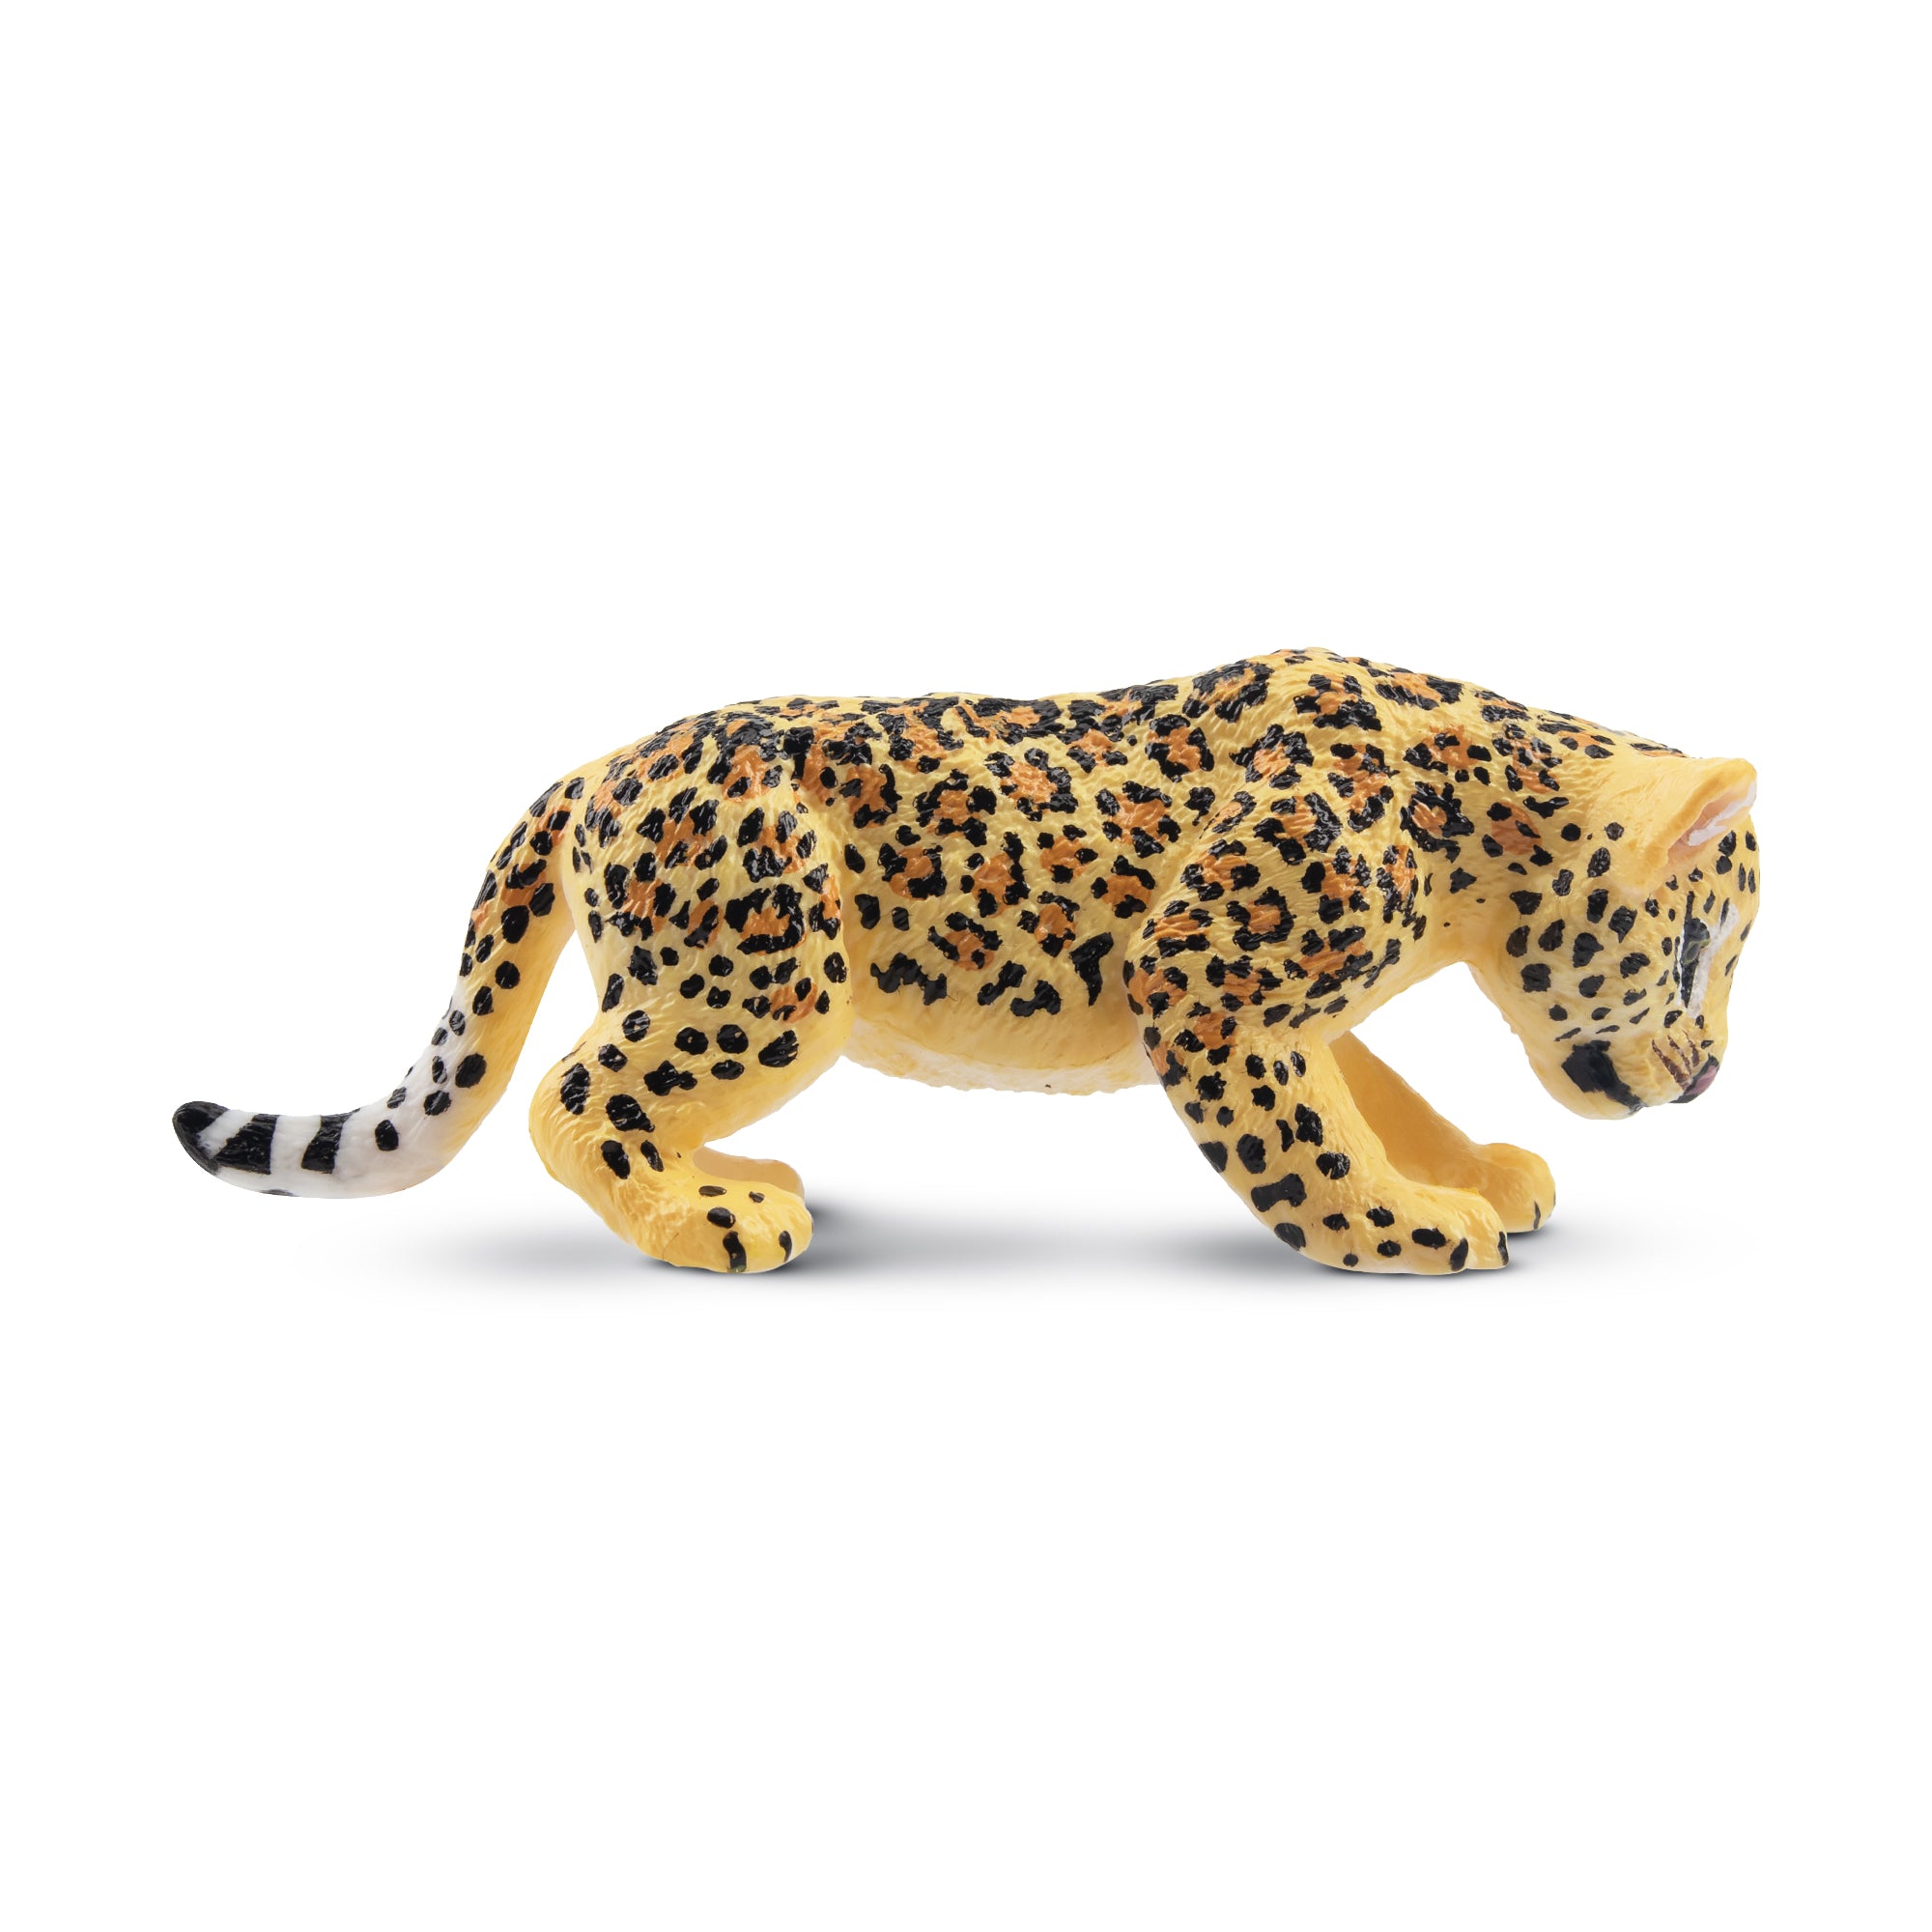 Toymany Standing Leopard Cub Figurine Toy